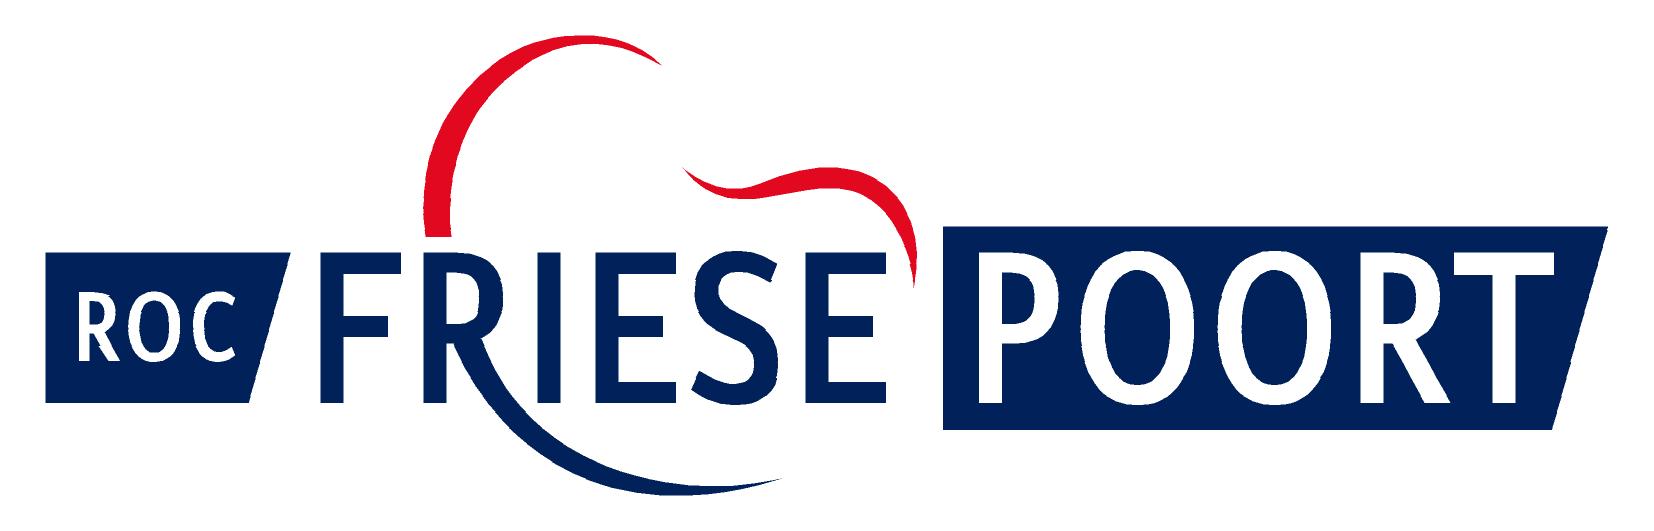 ROC Friese Poort Logo photo - 1